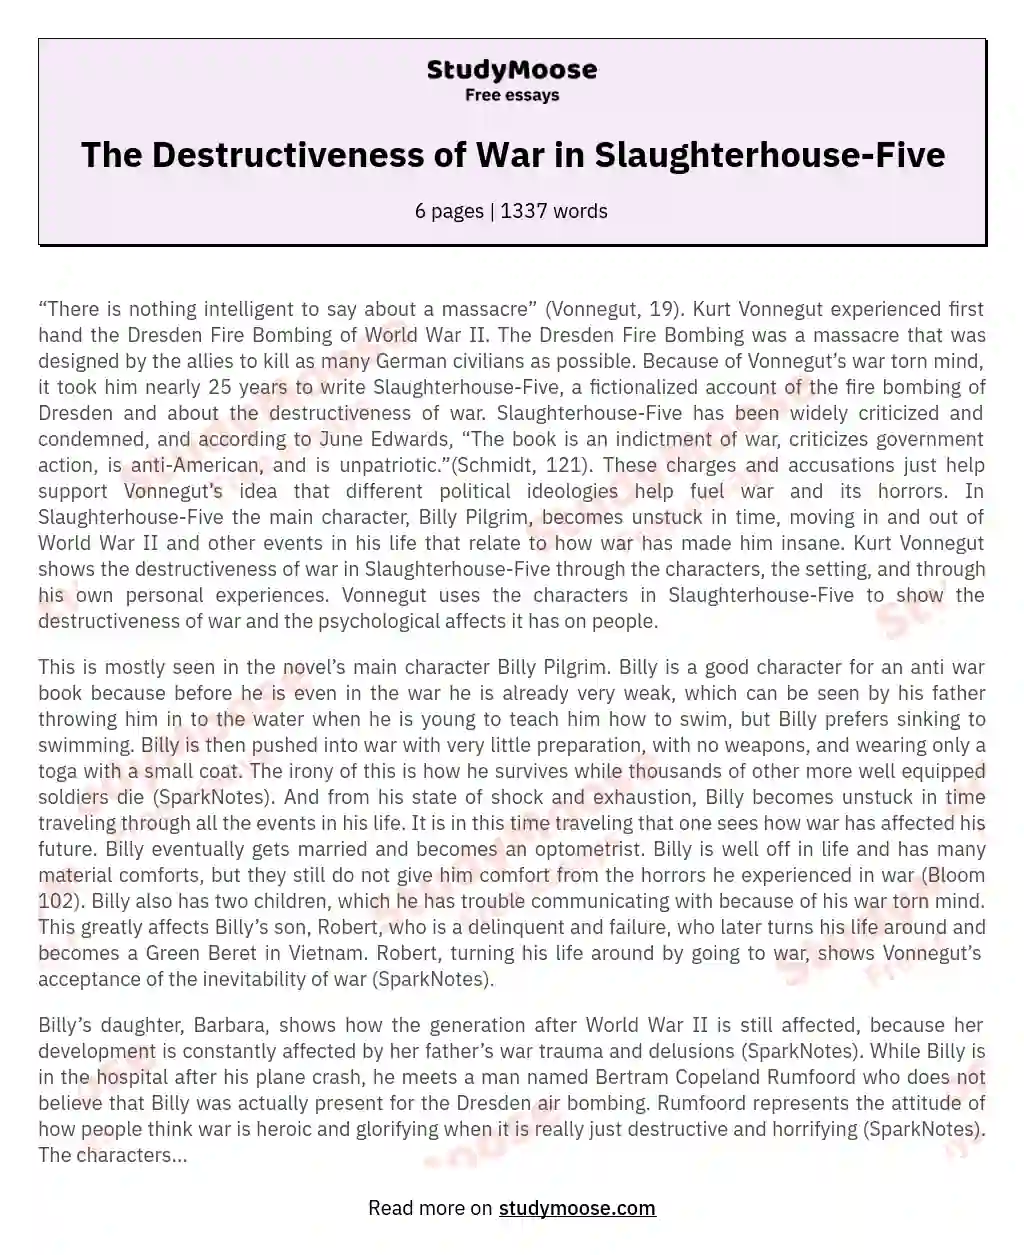 The Destructiveness of War in Slaughterhouse-Five essay